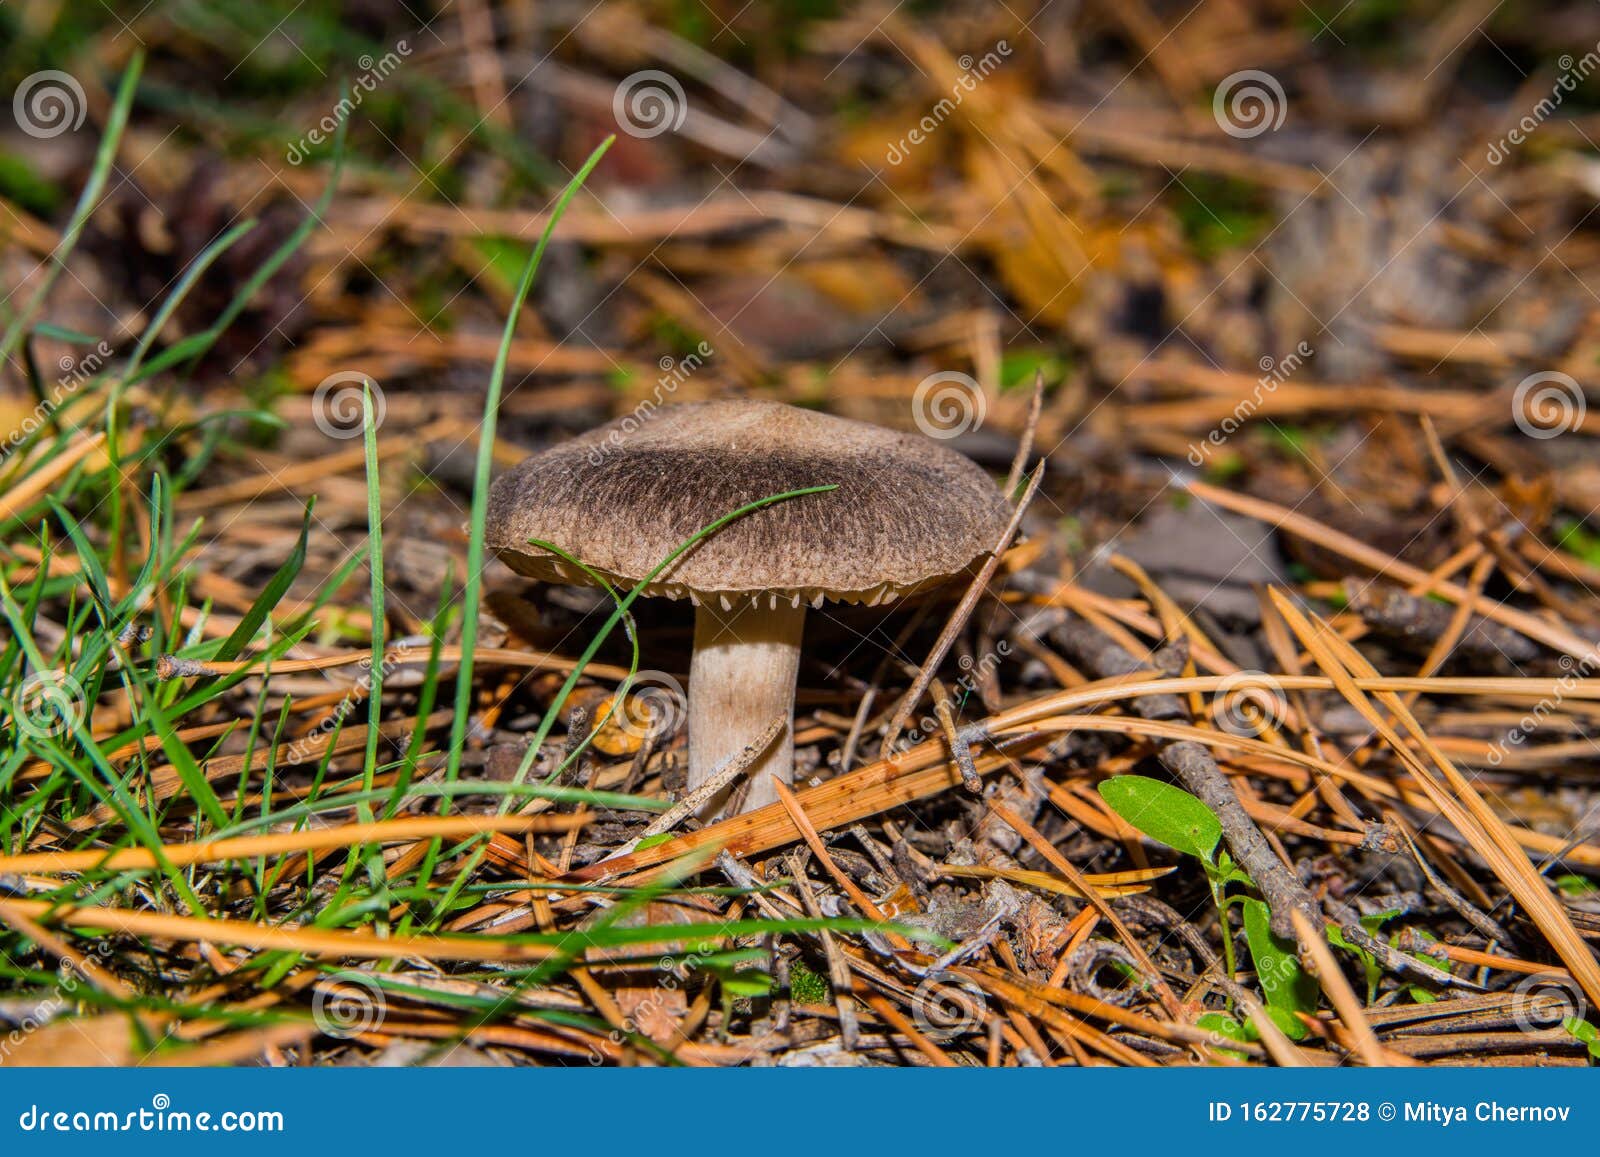 beautiful mushroom tricholoma triste in a pine forest. mushroom close-up.